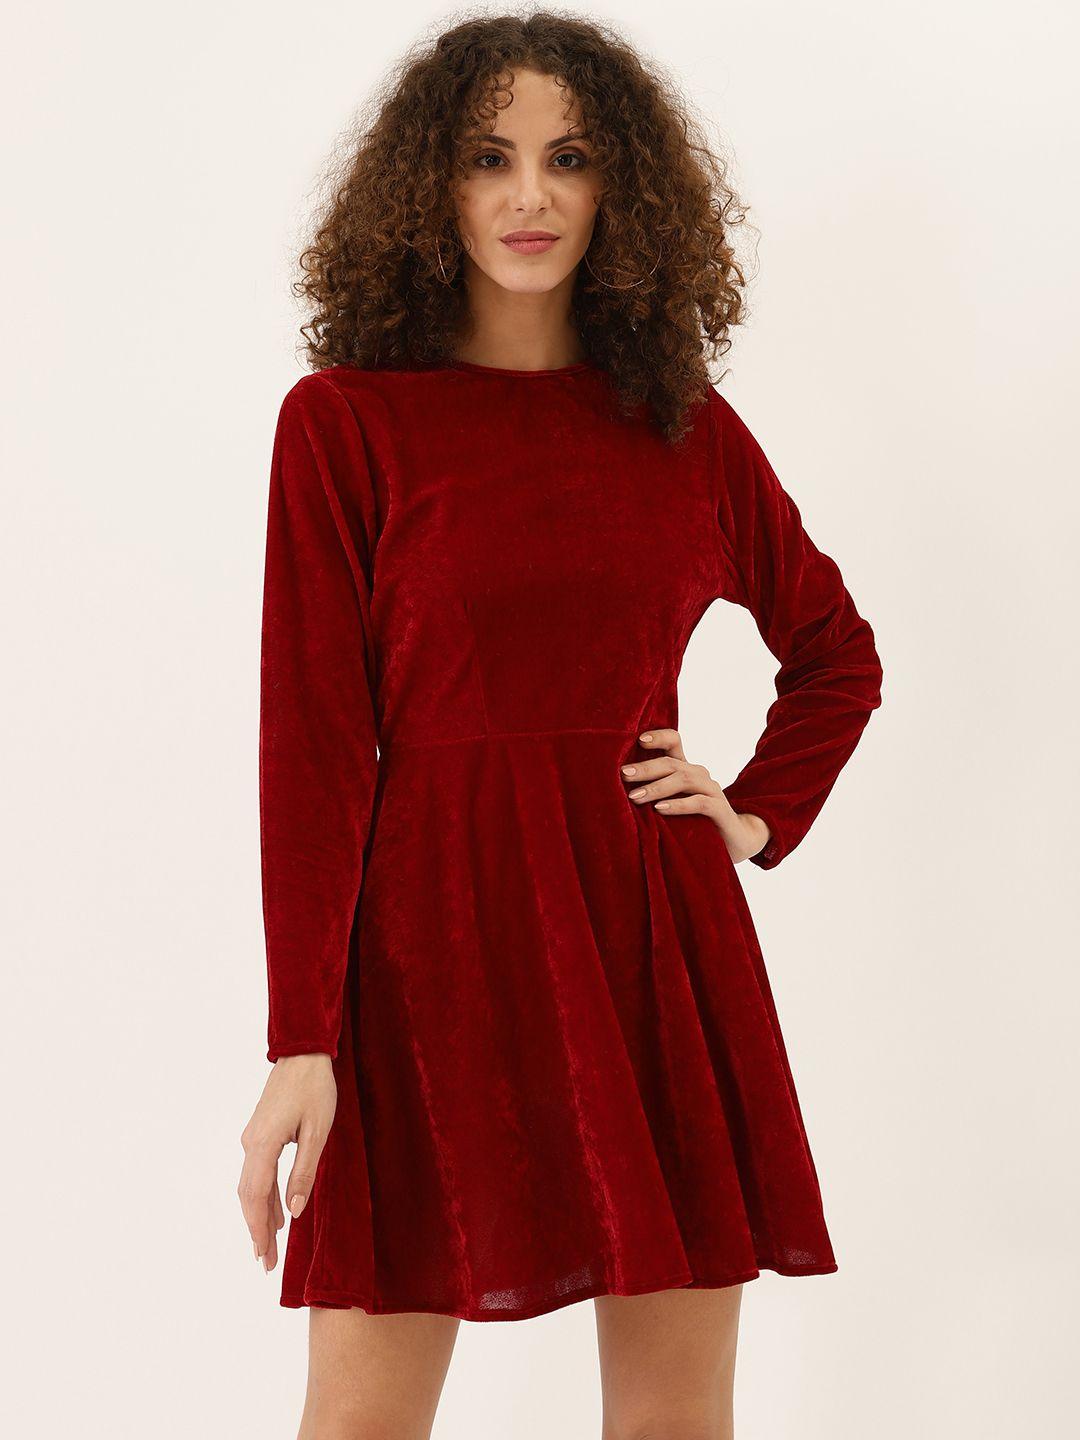 dodo & moa women maroon velvet finish solid fit and flare dress